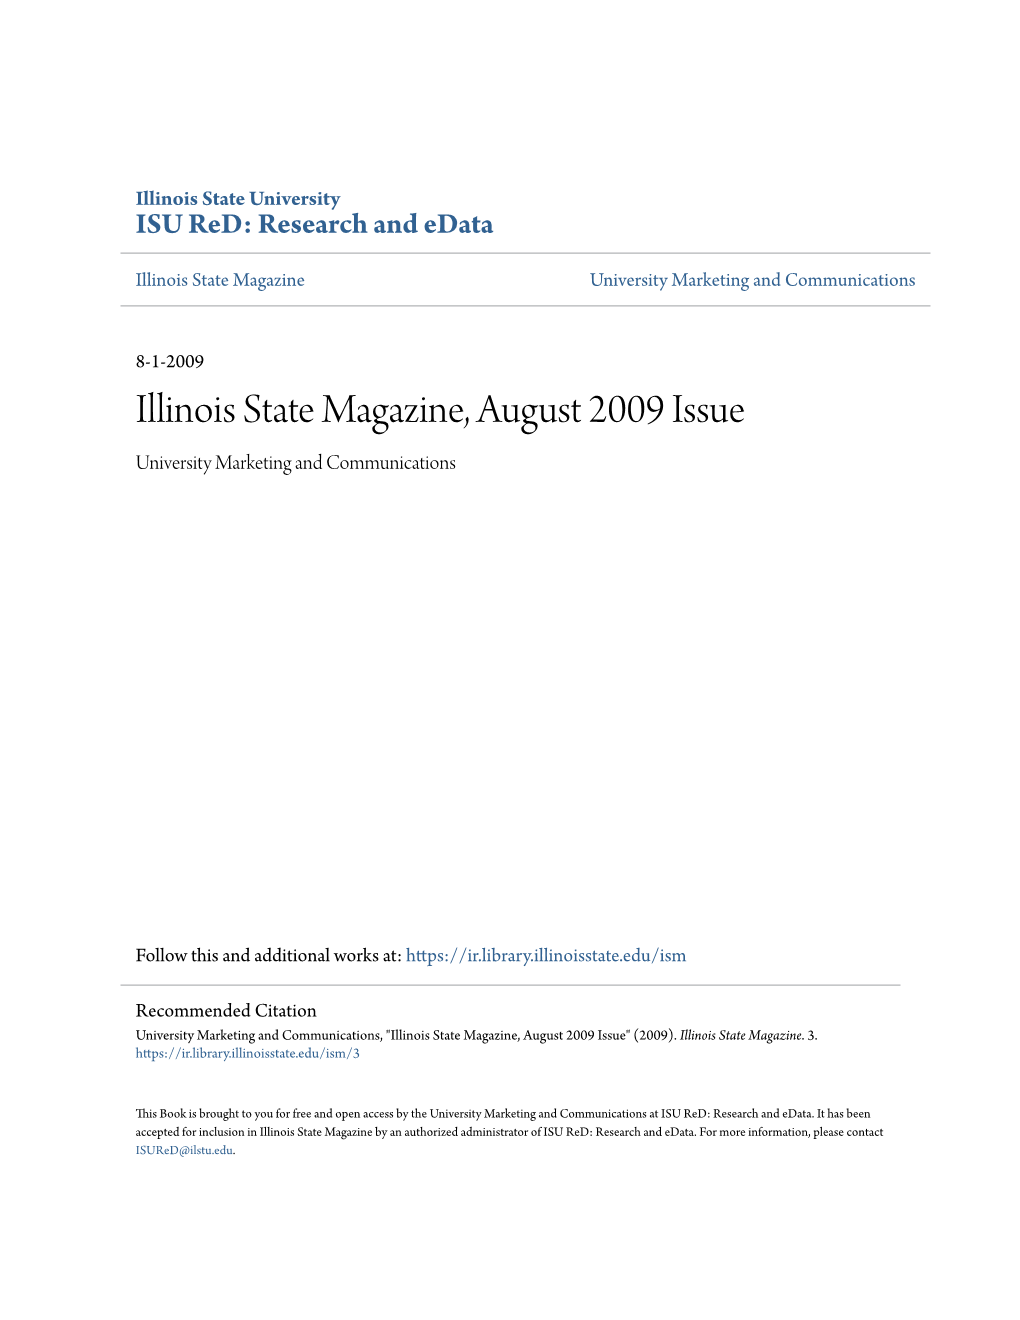 Illinois State Magazine, August 2009 Issue University Marketing and Communications